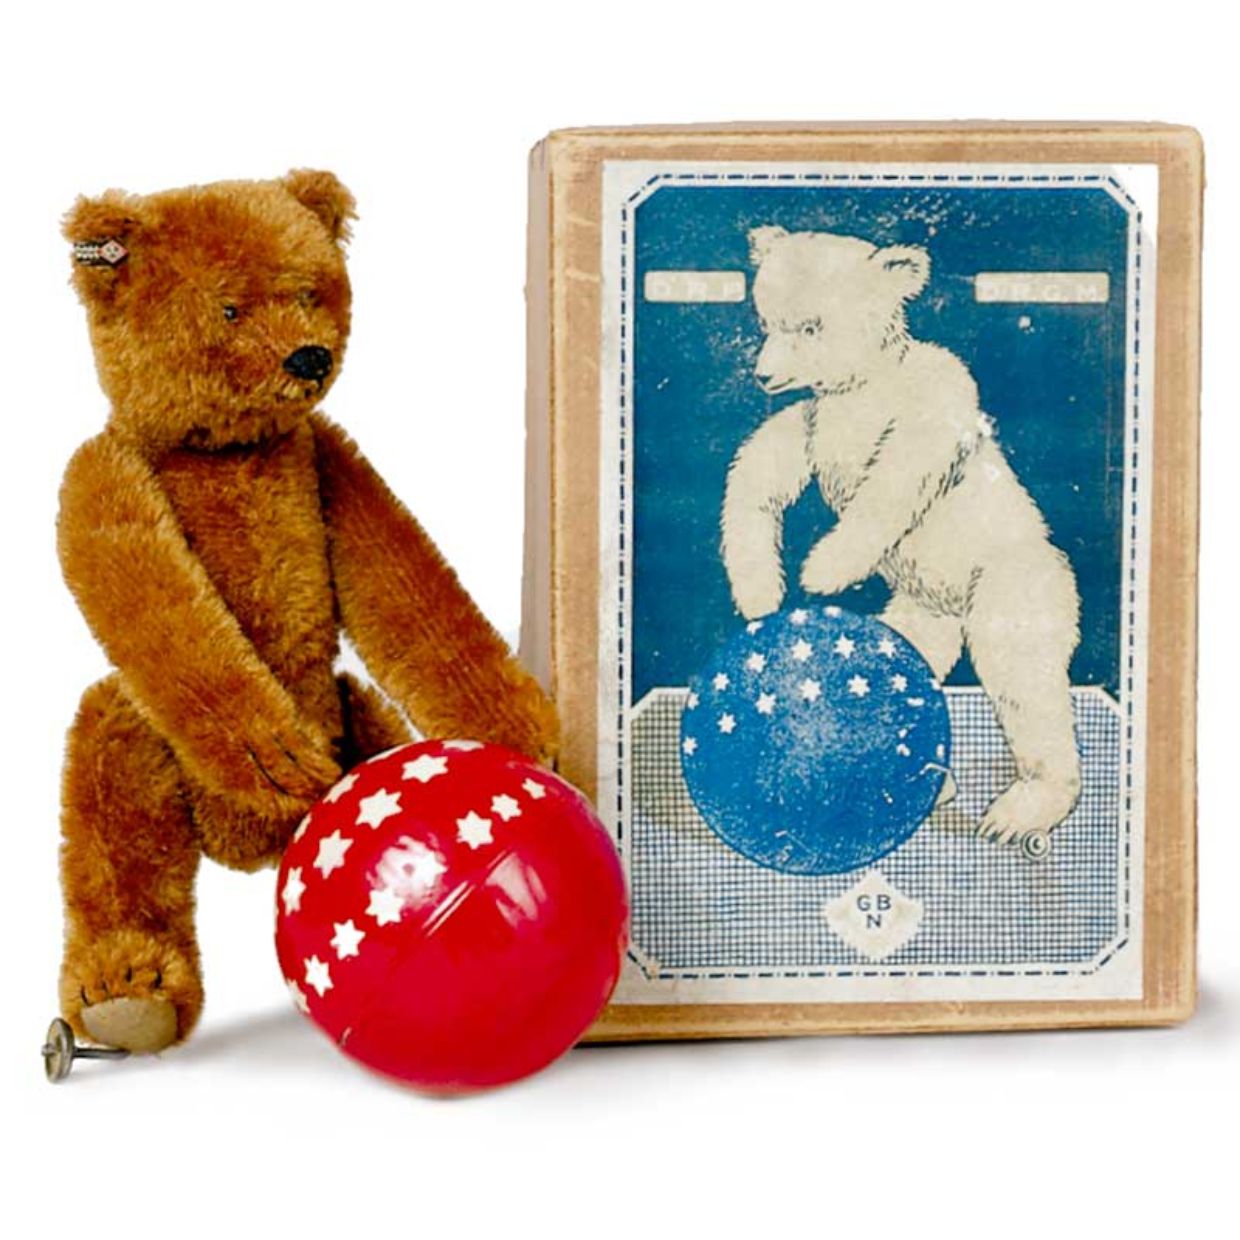 Teddy bears 2, 1912, Germany